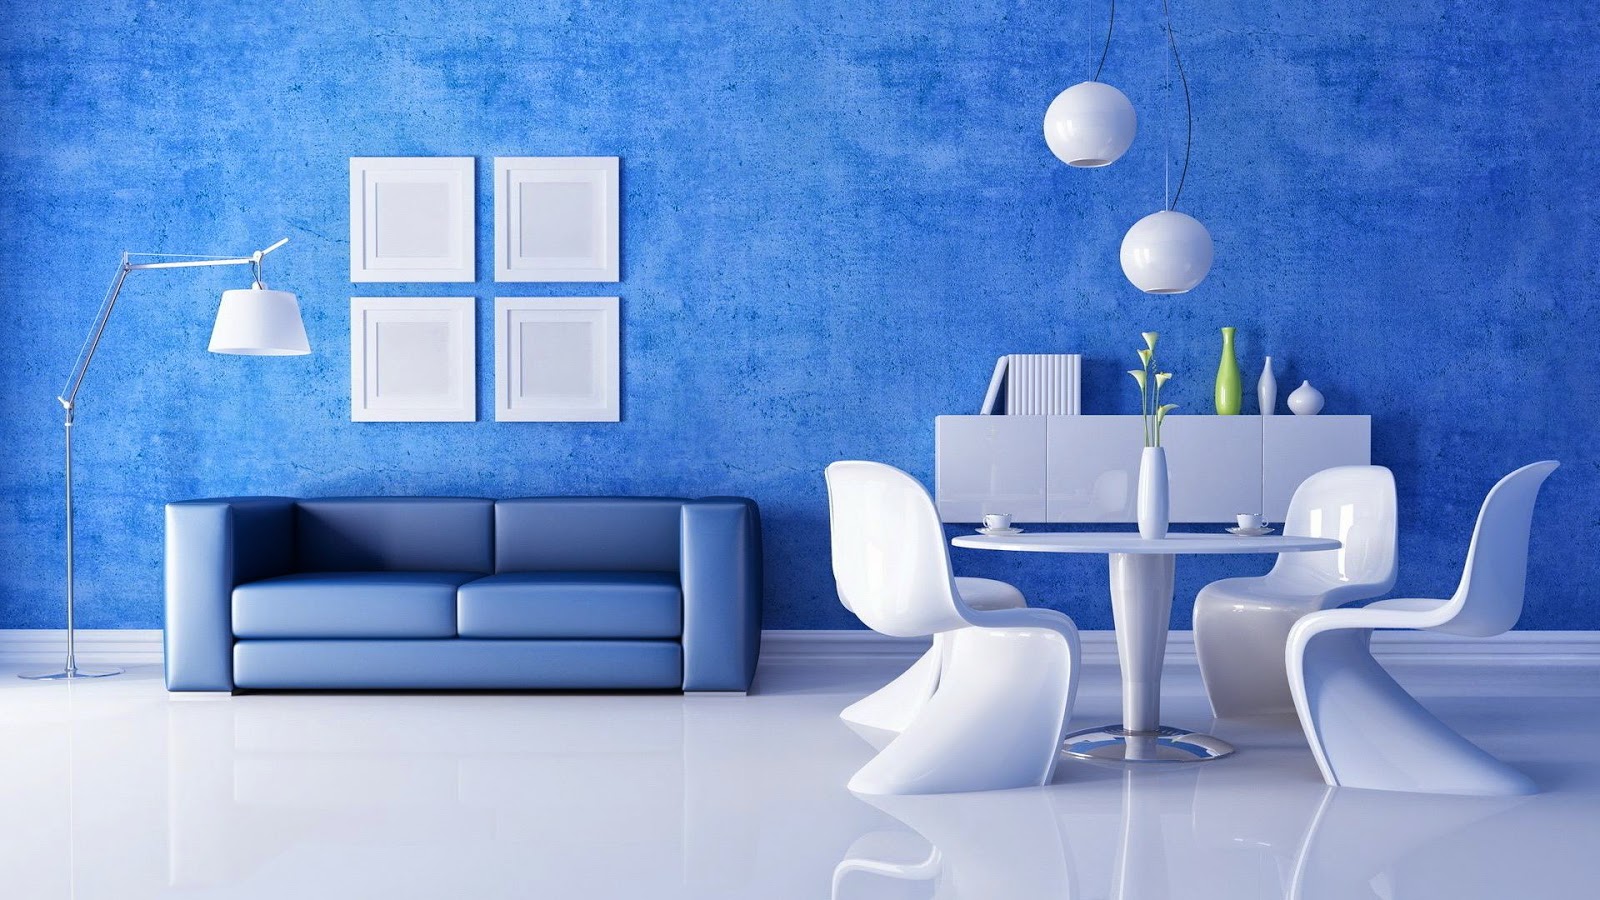 wallpaper dinding kamar tidur romantis,blue,living room,room,product,interior design